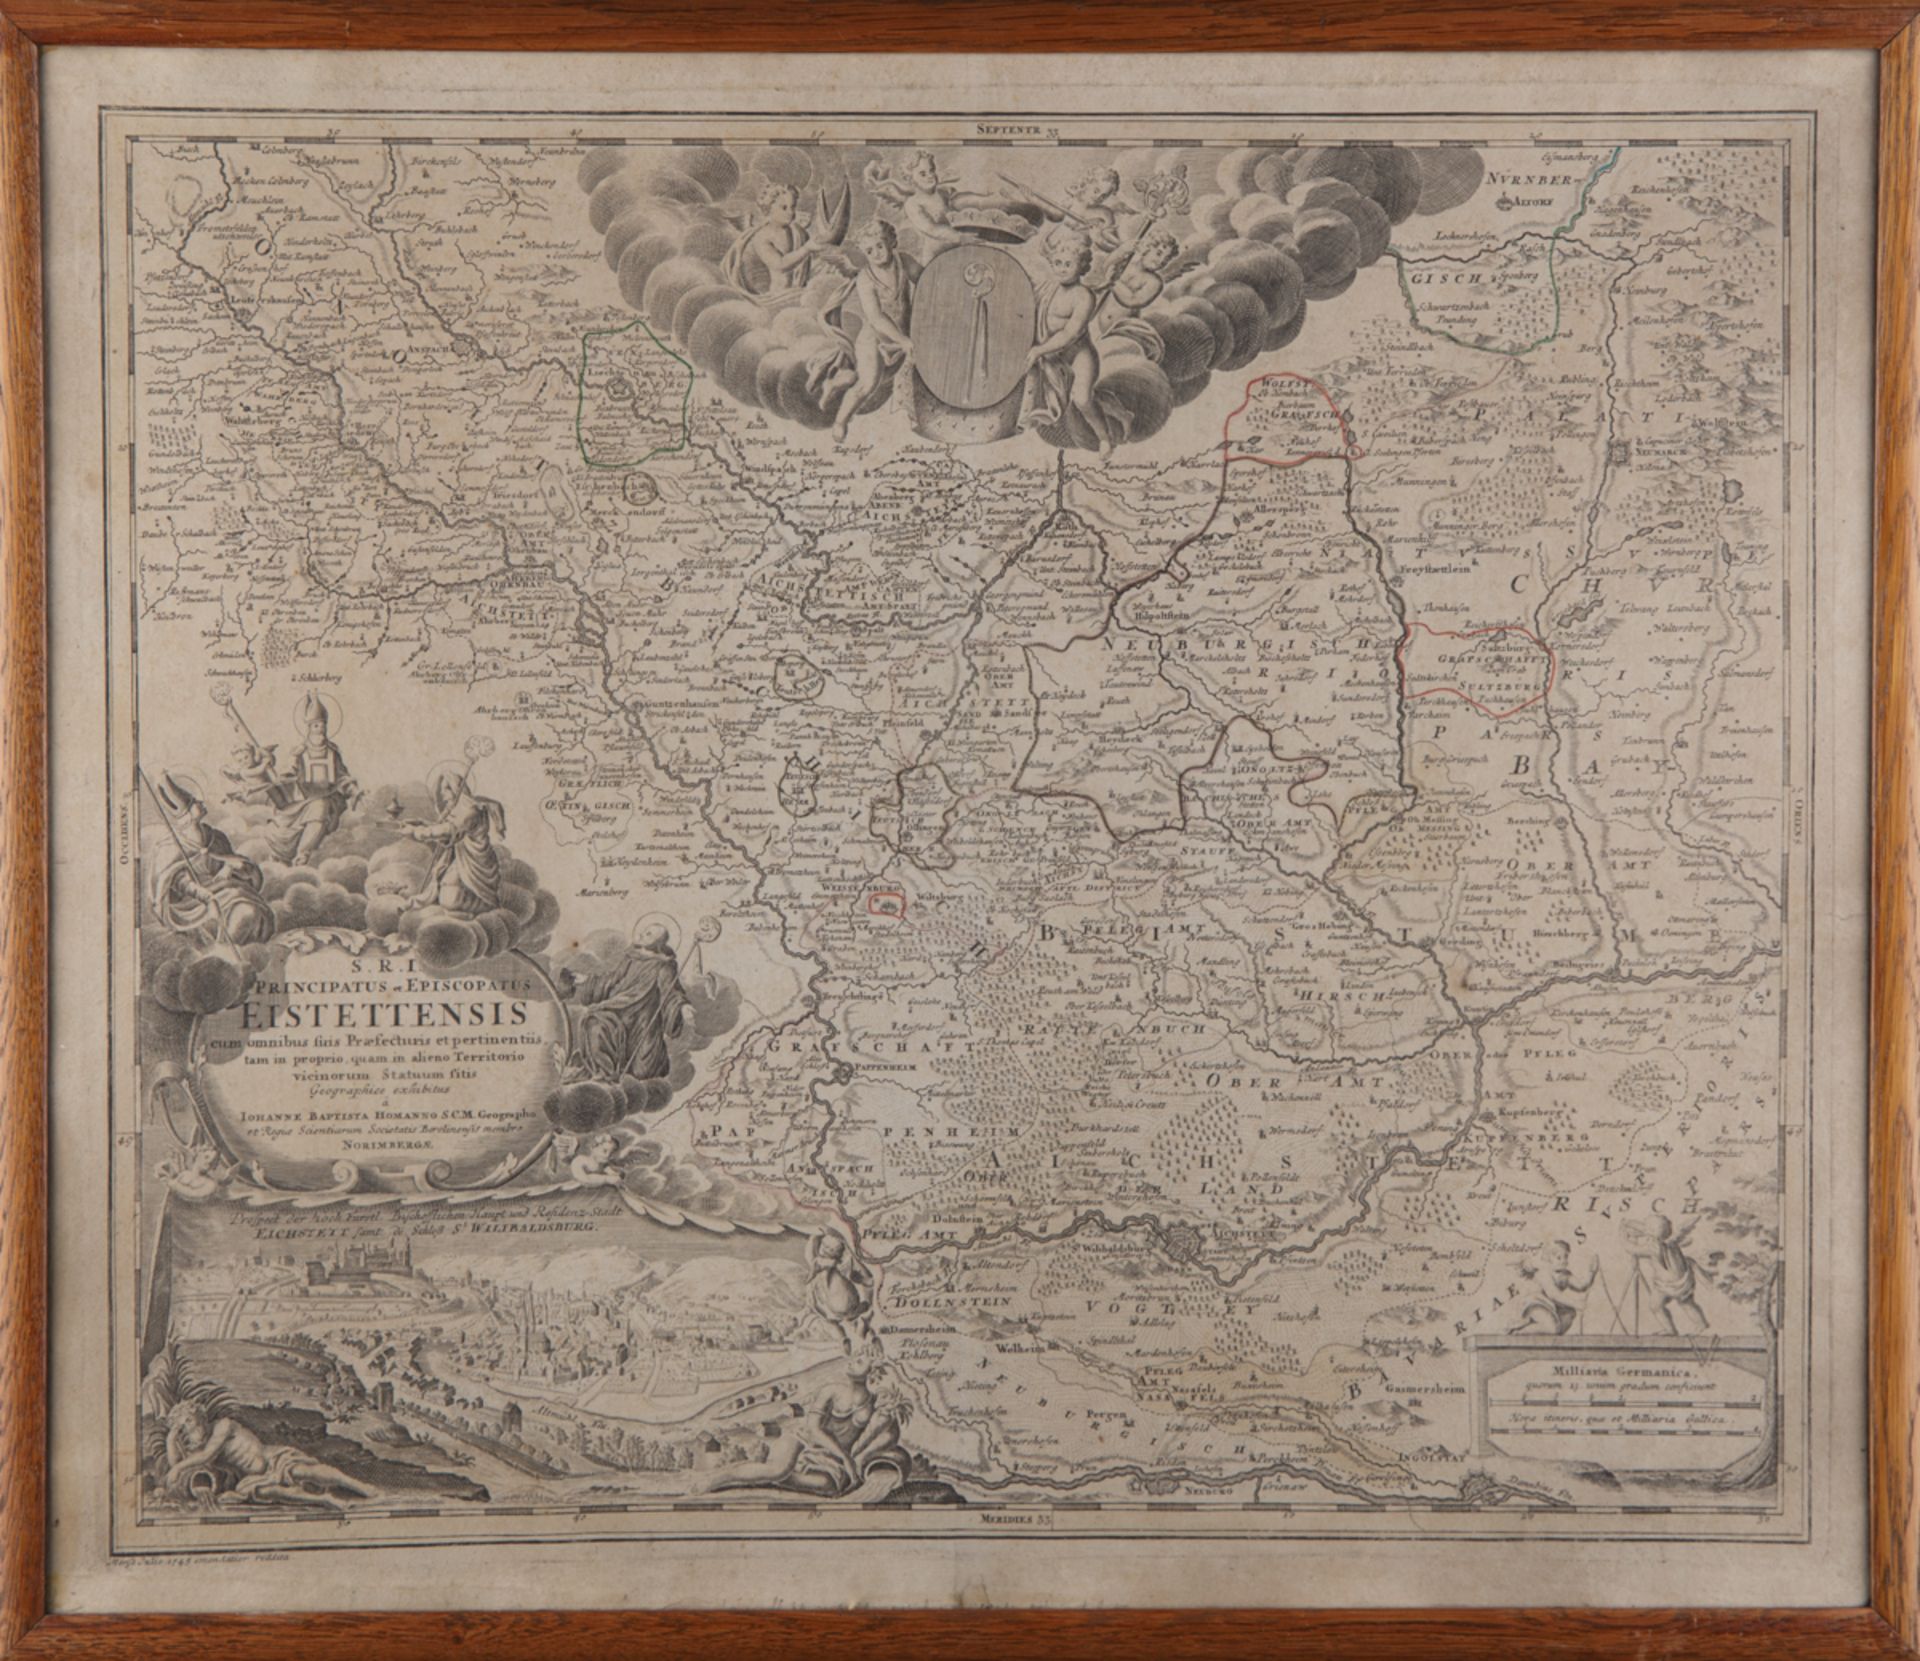 Landkarte des Kreises Eichstätt, Johann Baptist Homann Erben, Nürnberg 1745